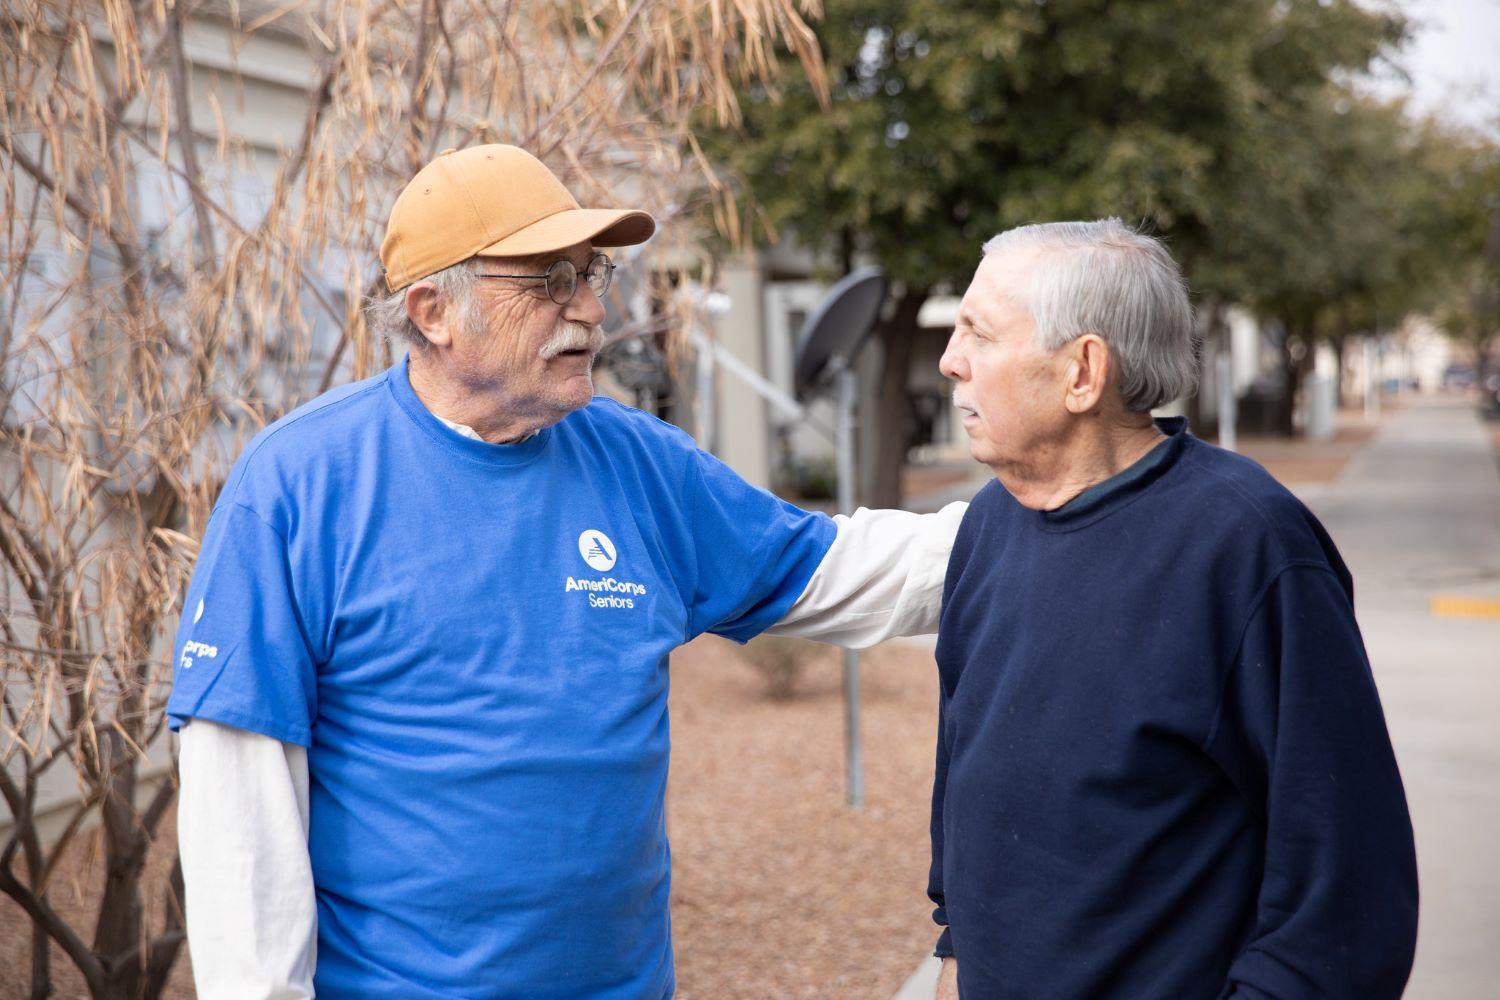 Two male AmeriCorps Seniors volunteers